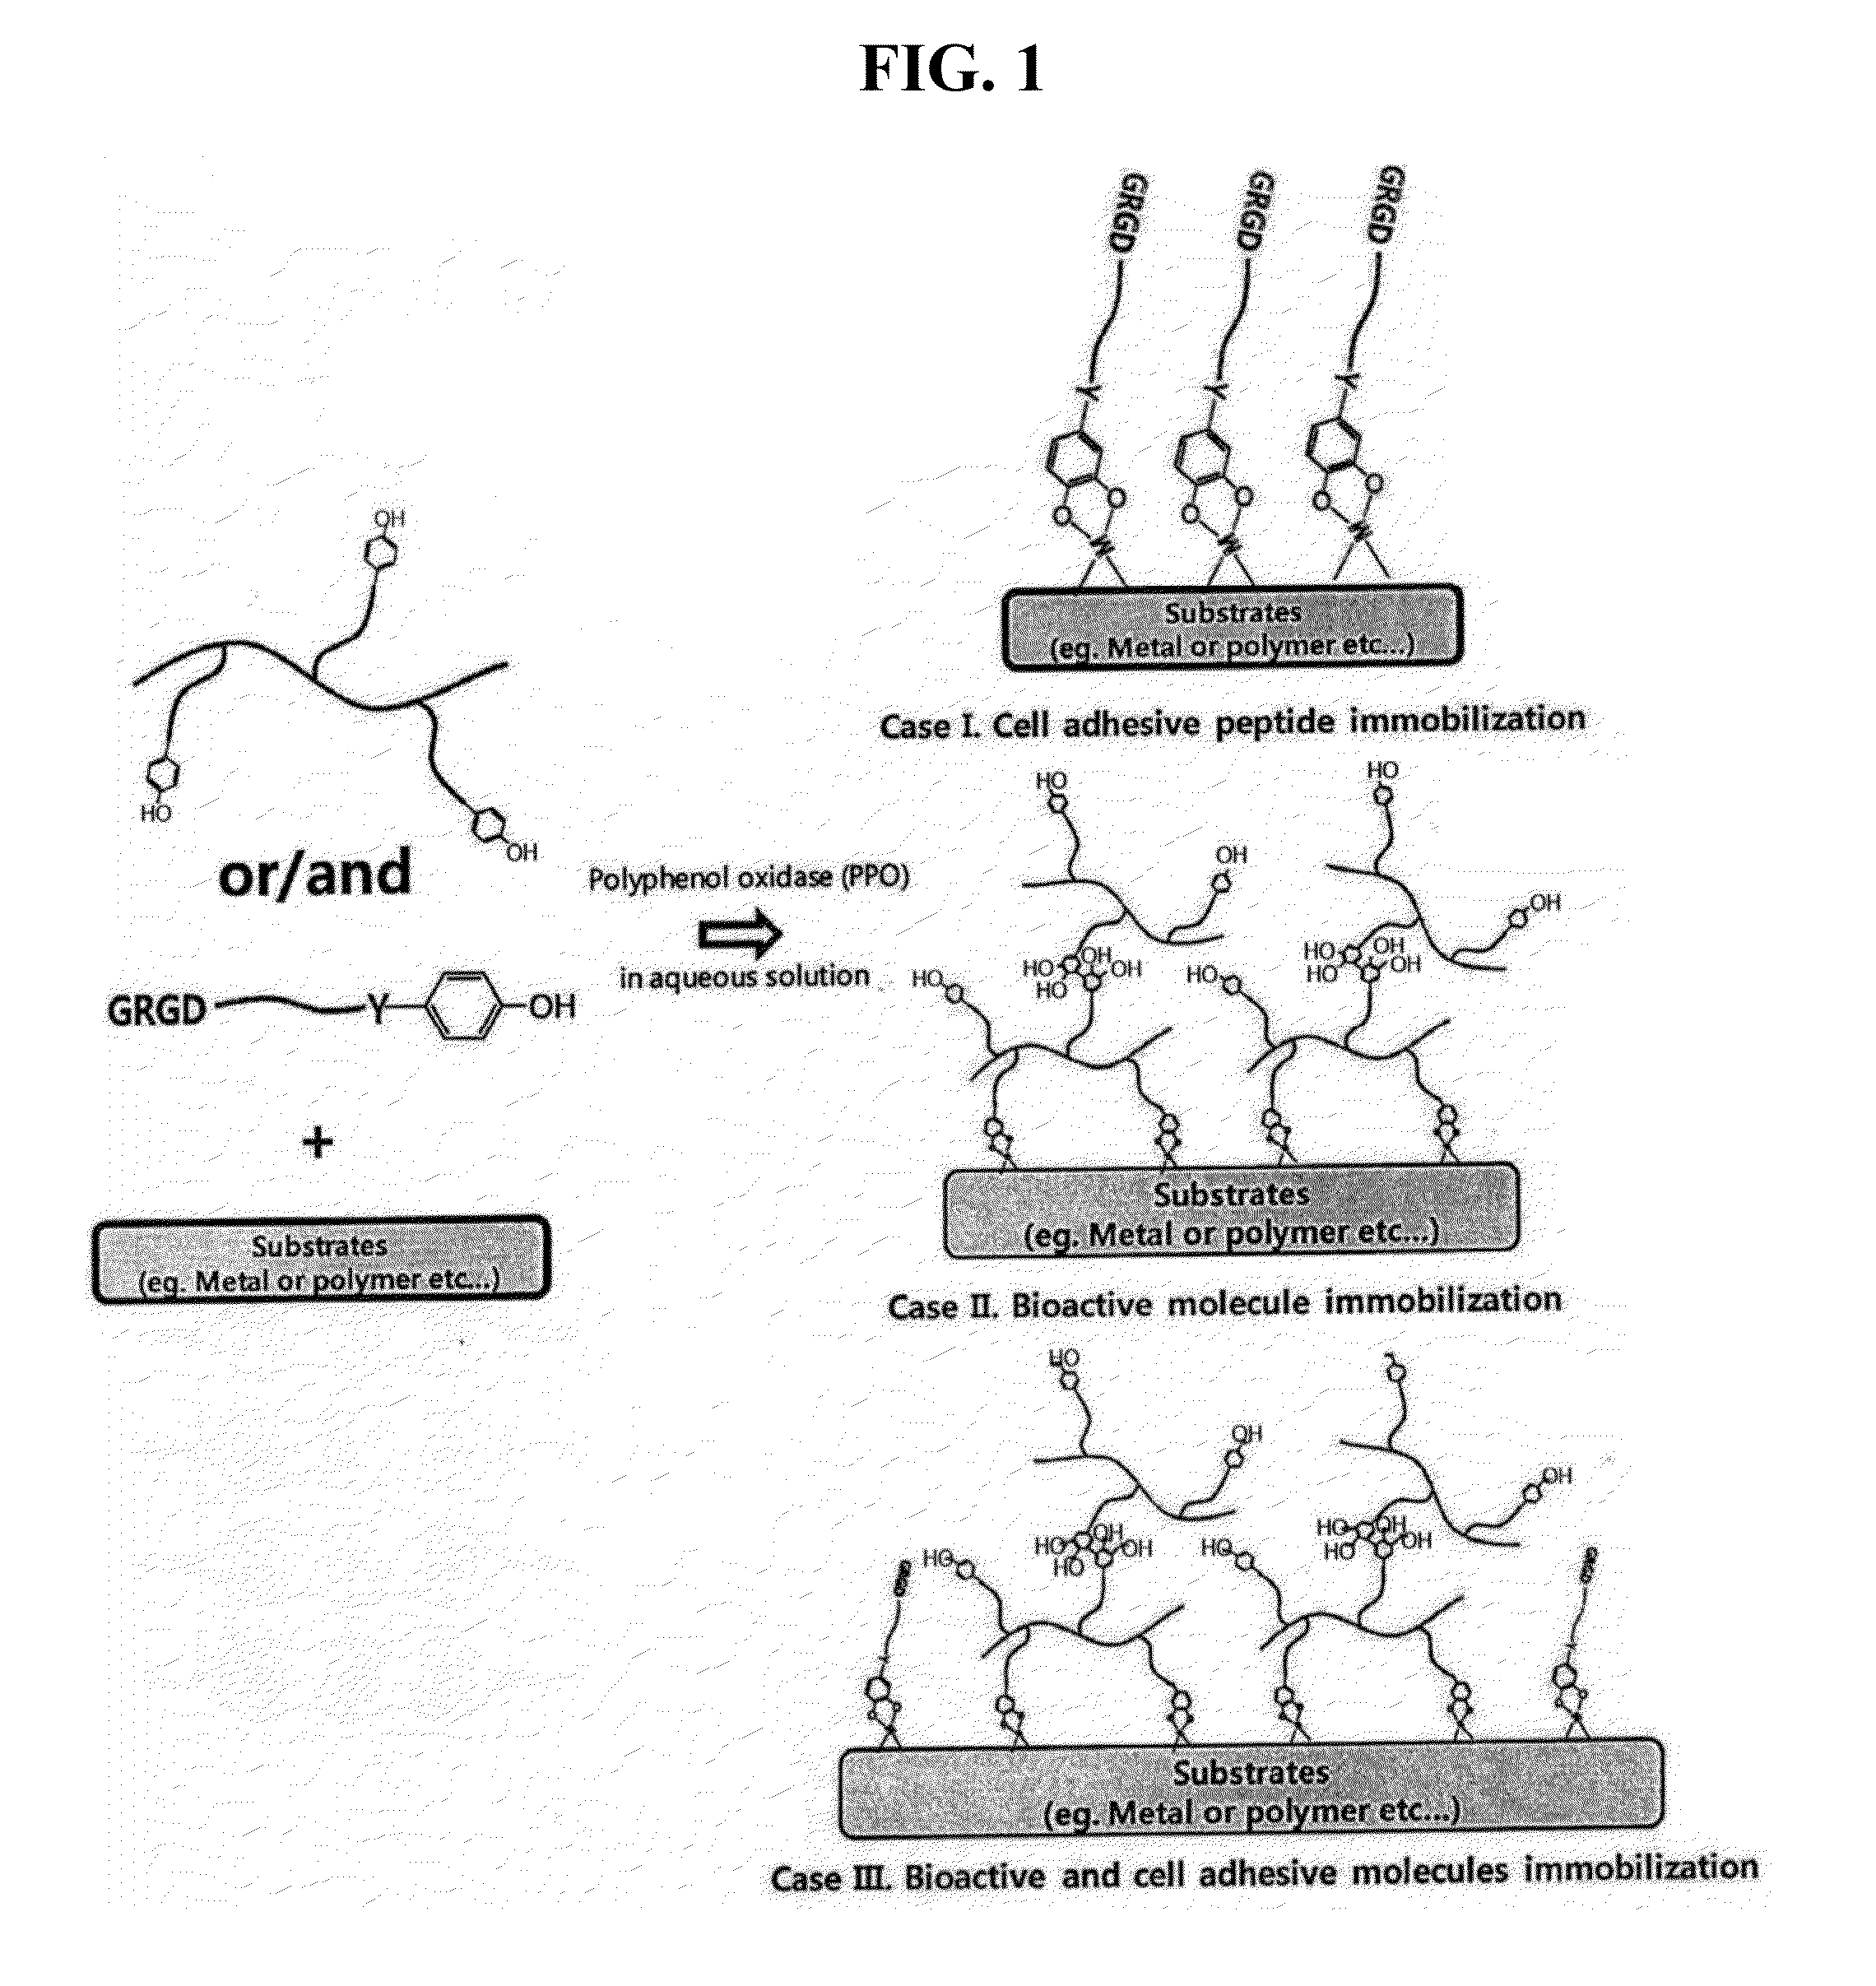 Immobilization method of bioactive molecules using polyphenol oxidase